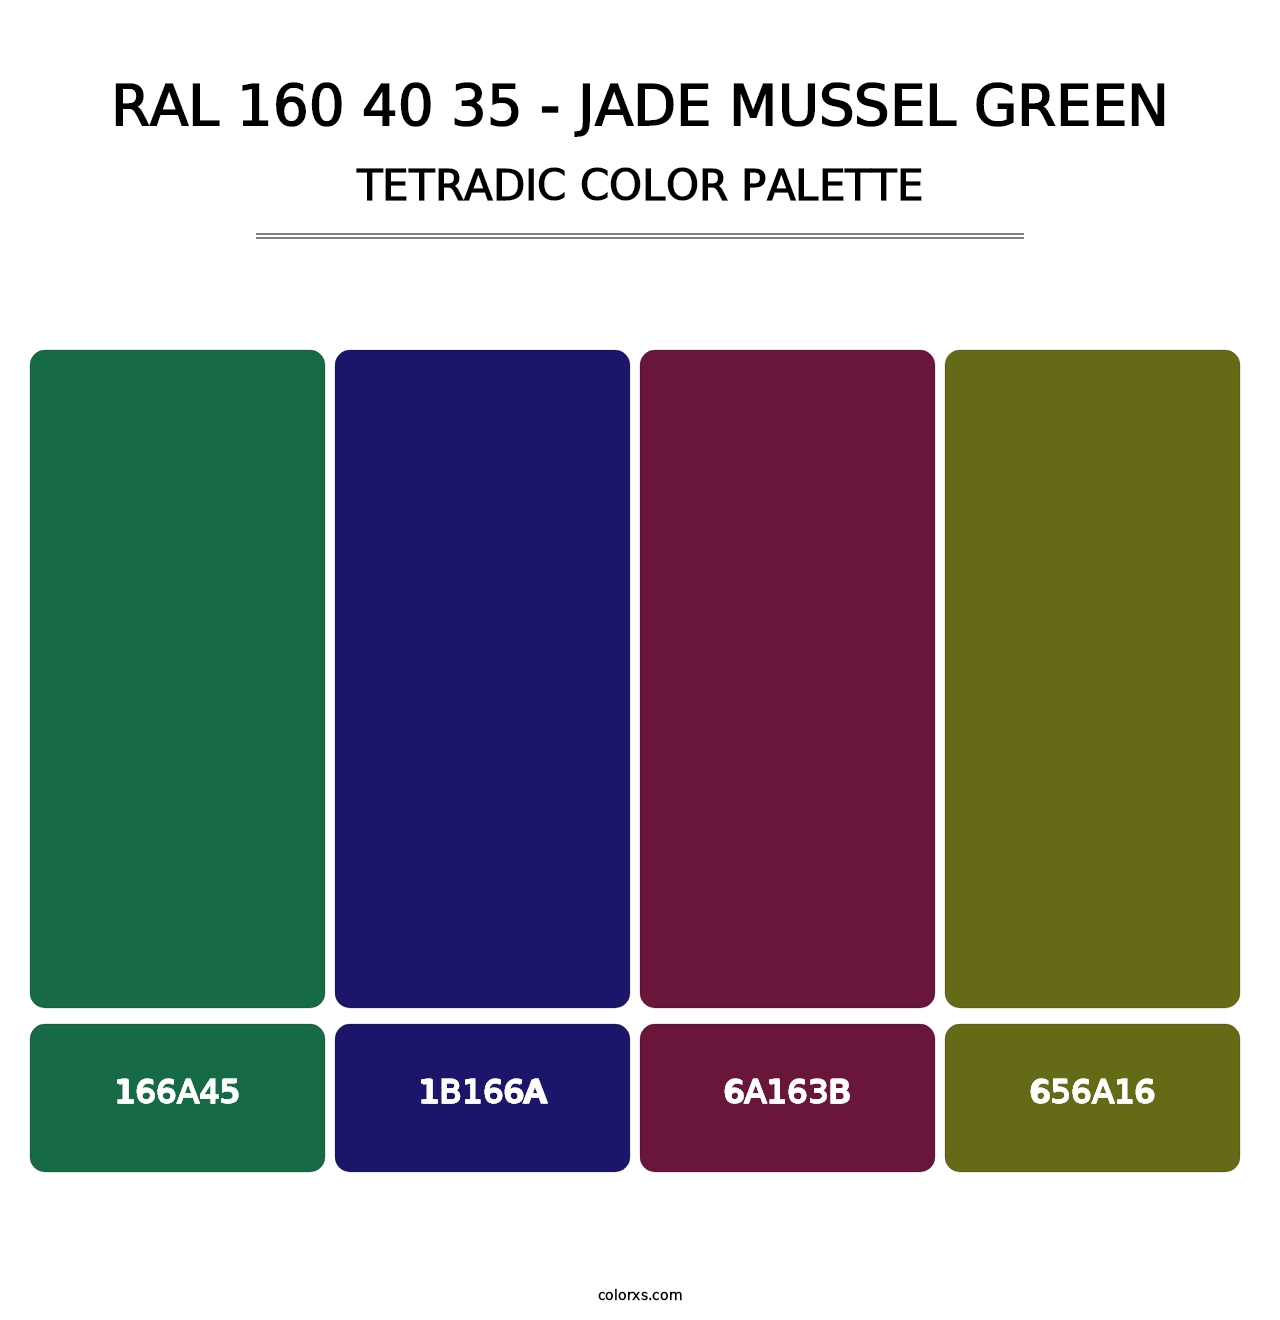 RAL 160 40 35 - Jade Mussel Green - Tetradic Color Palette